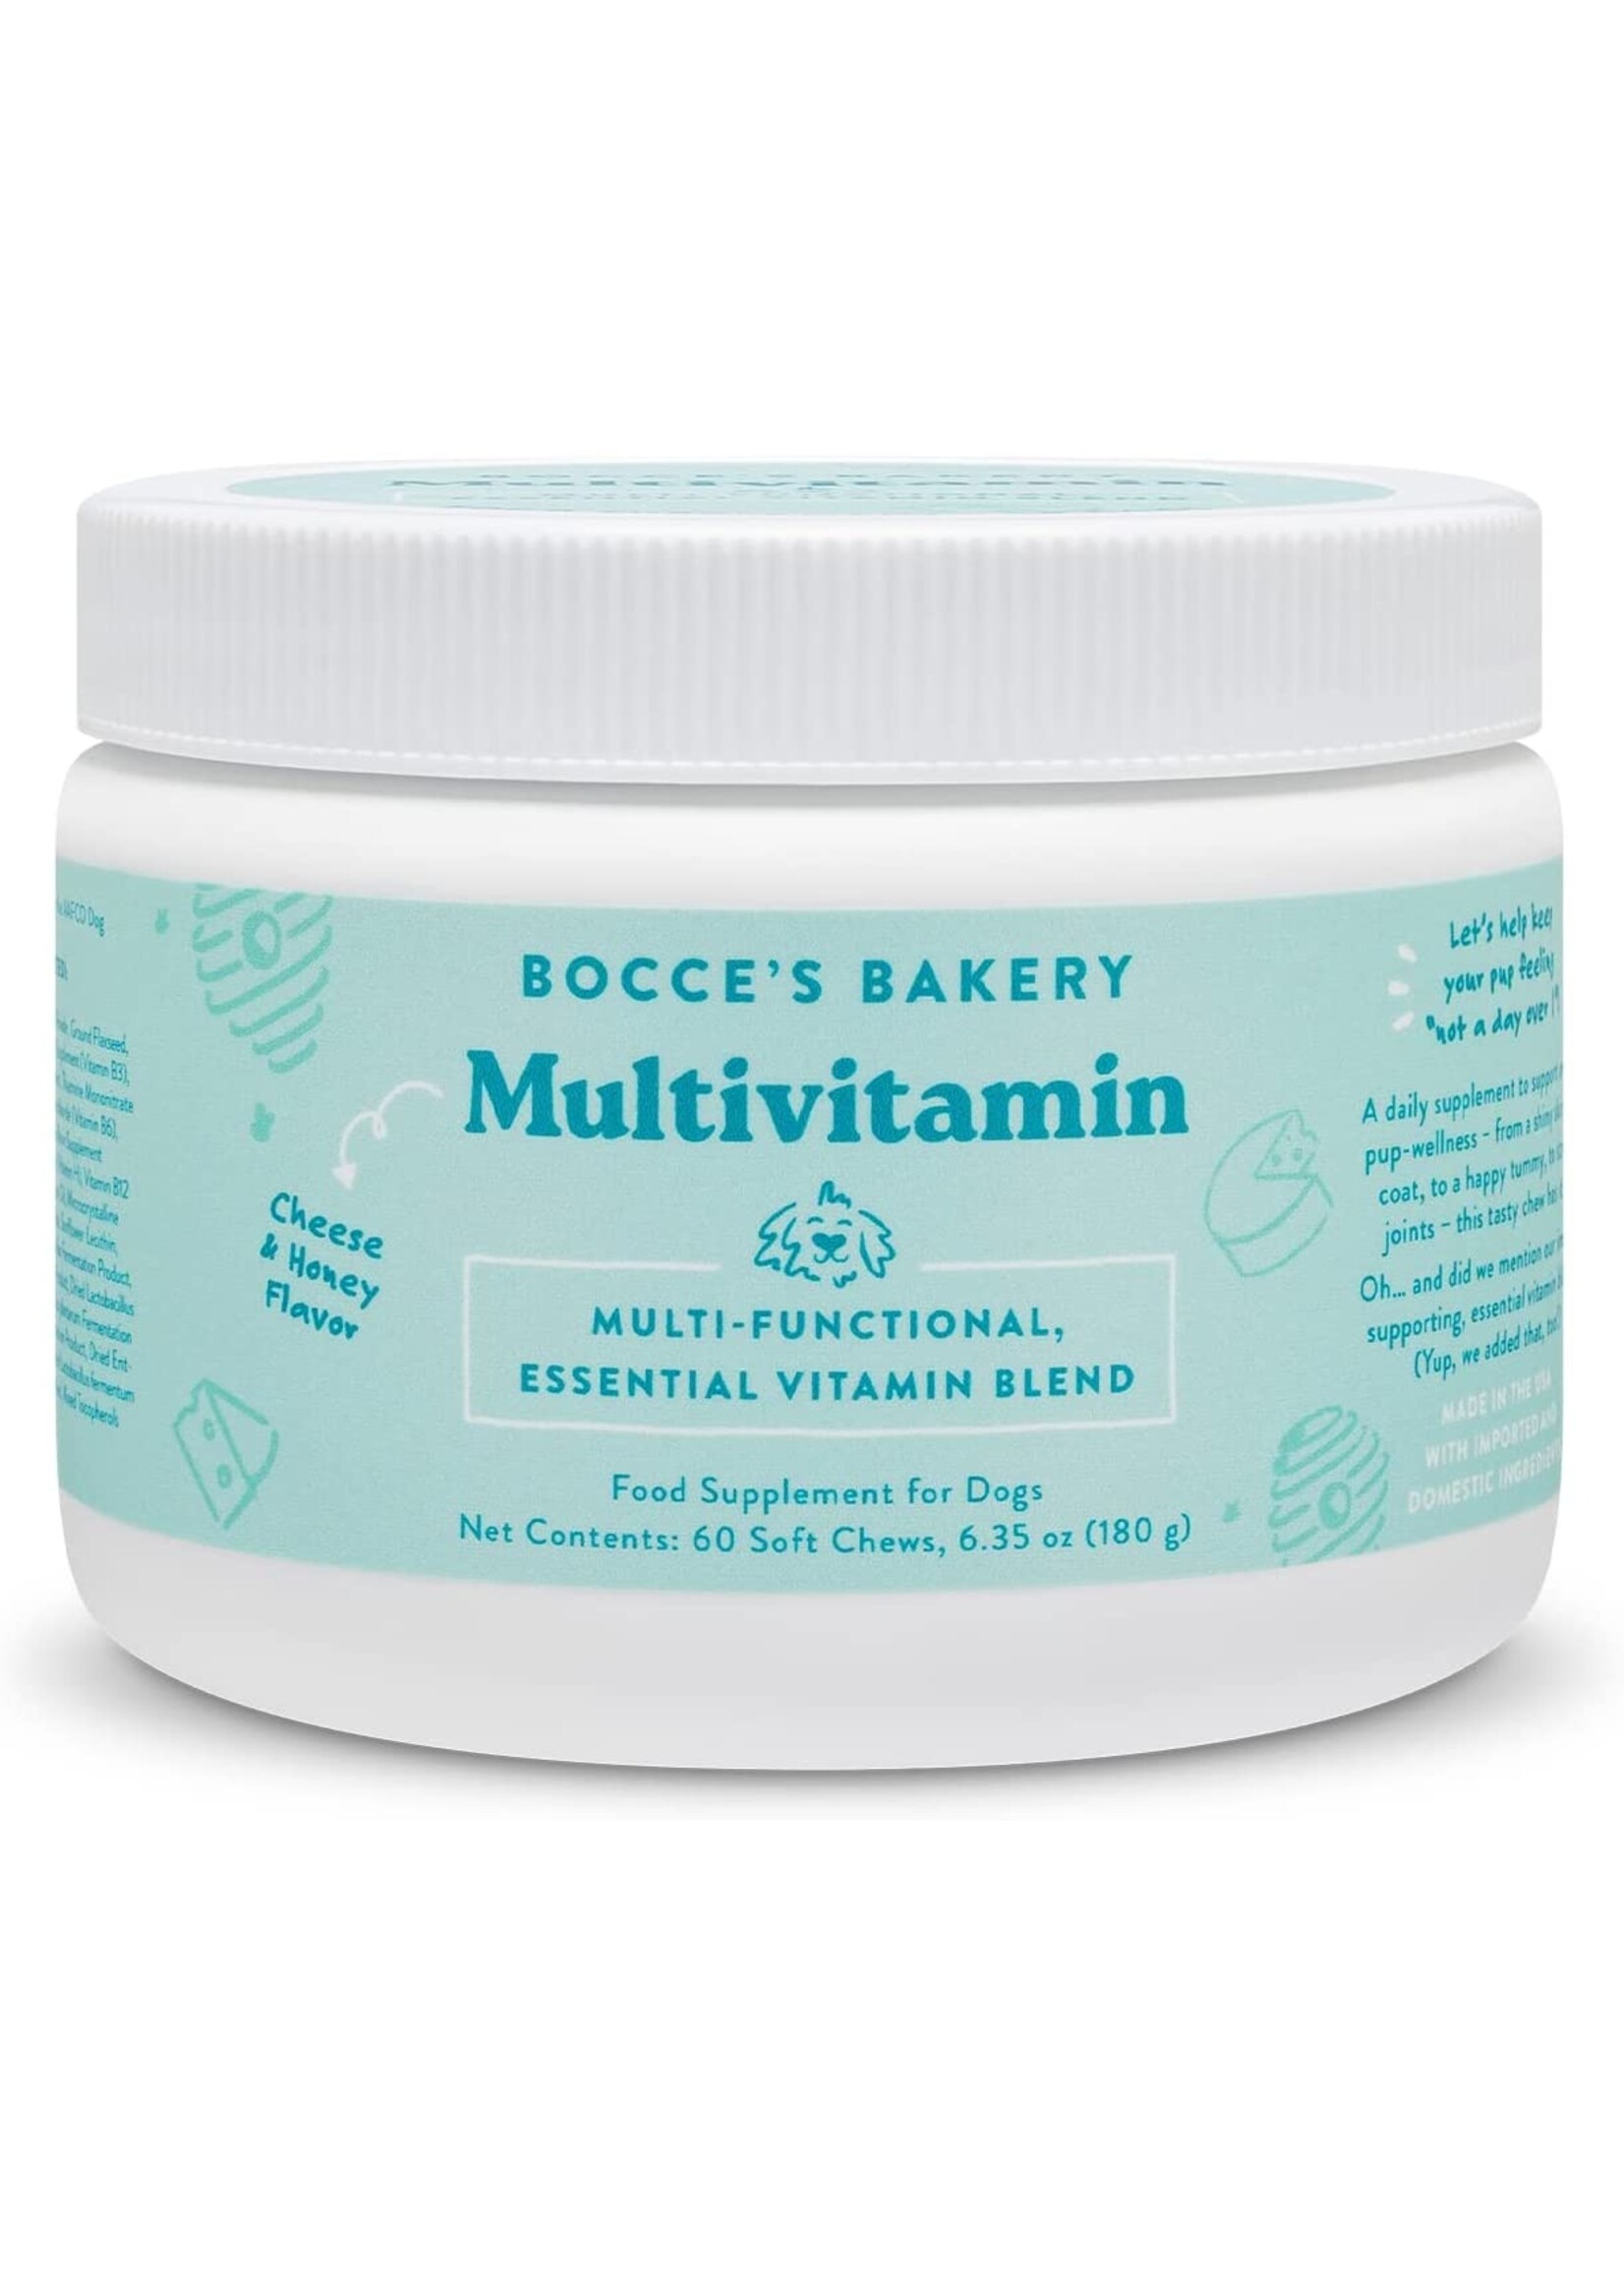 Bocce's Bakery Bocce's Bakery Multivitamin Dog Supplement 6.35oz